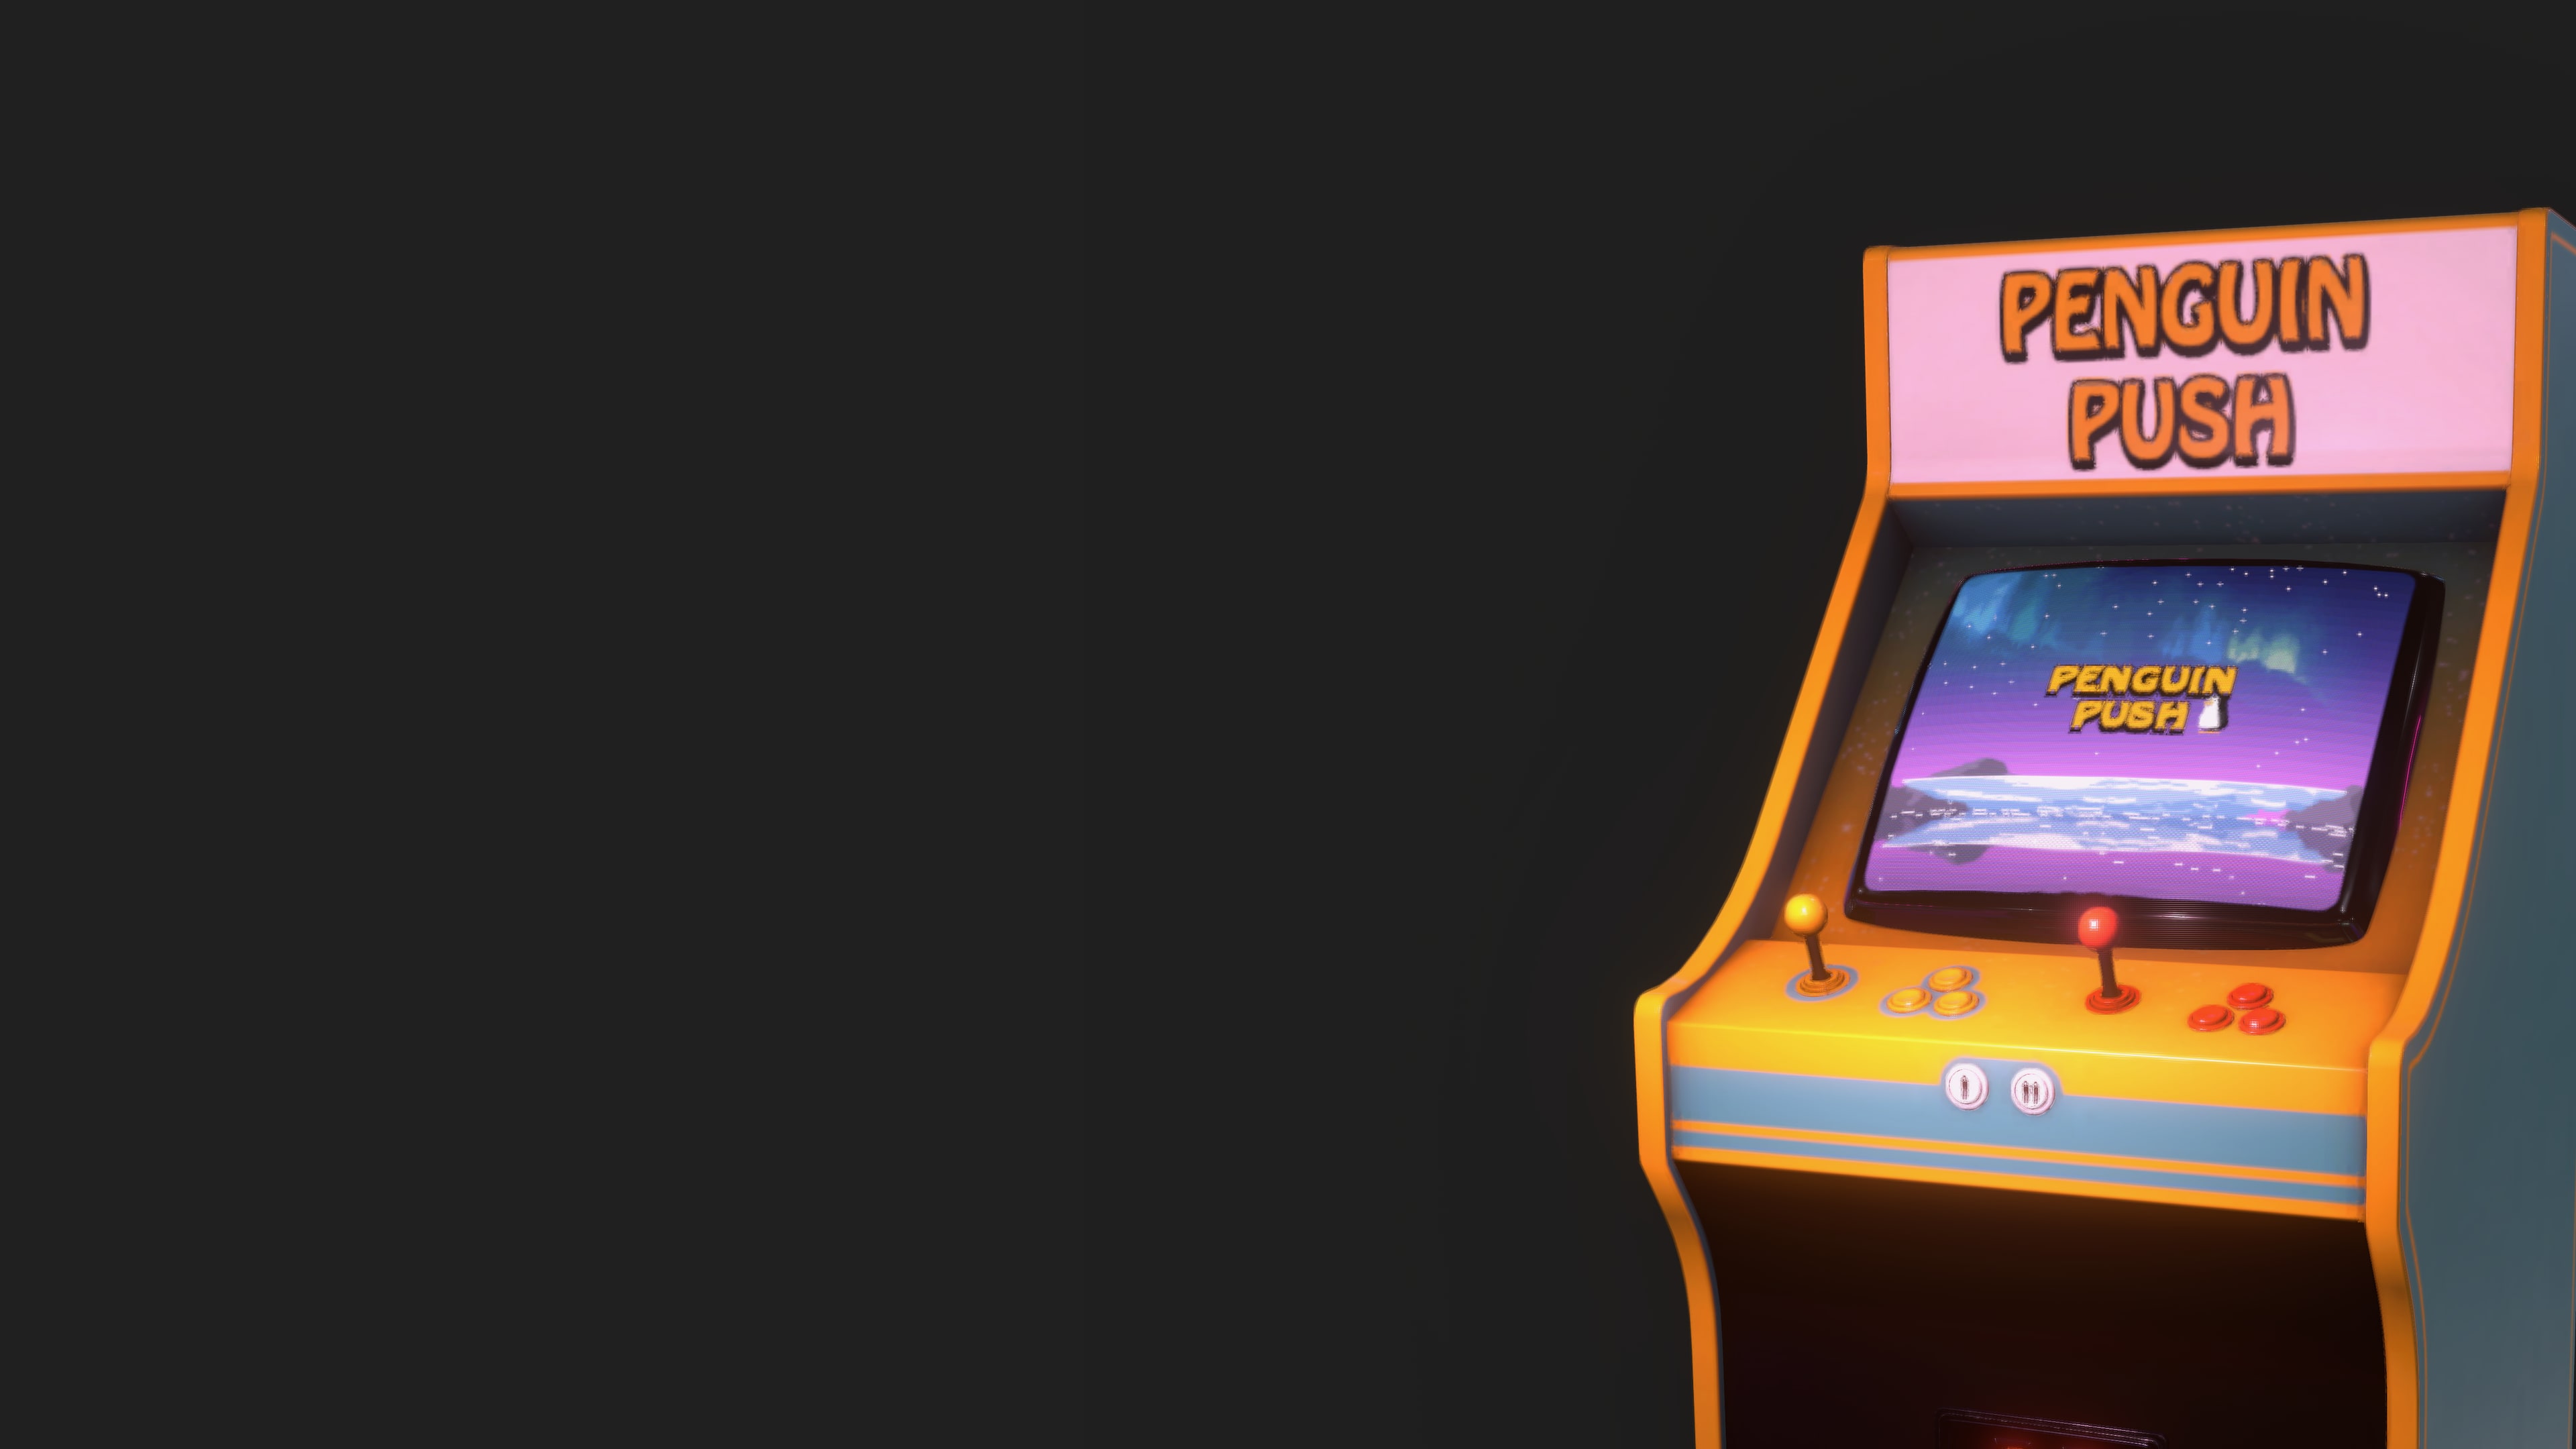 Arcade Paradise - Penguin Push